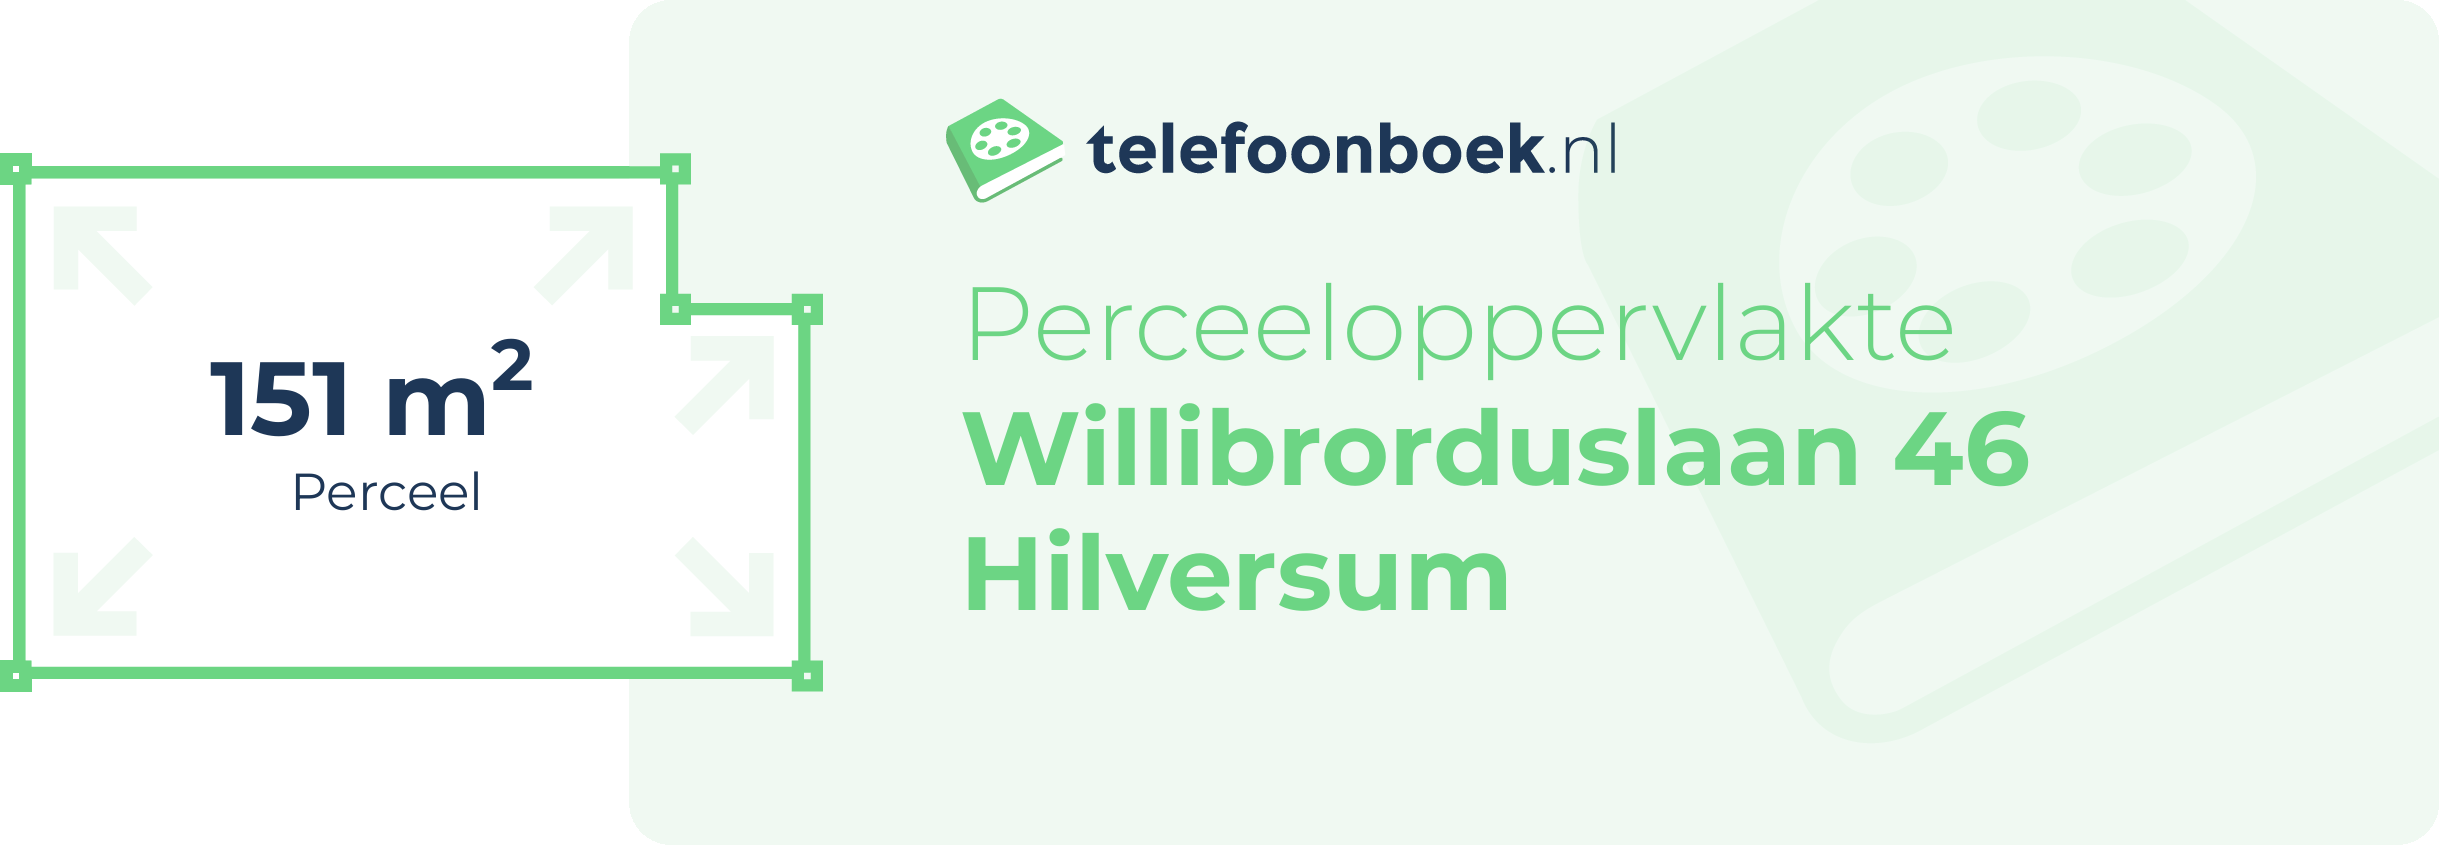 Perceeloppervlakte Willibrorduslaan 46 Hilversum